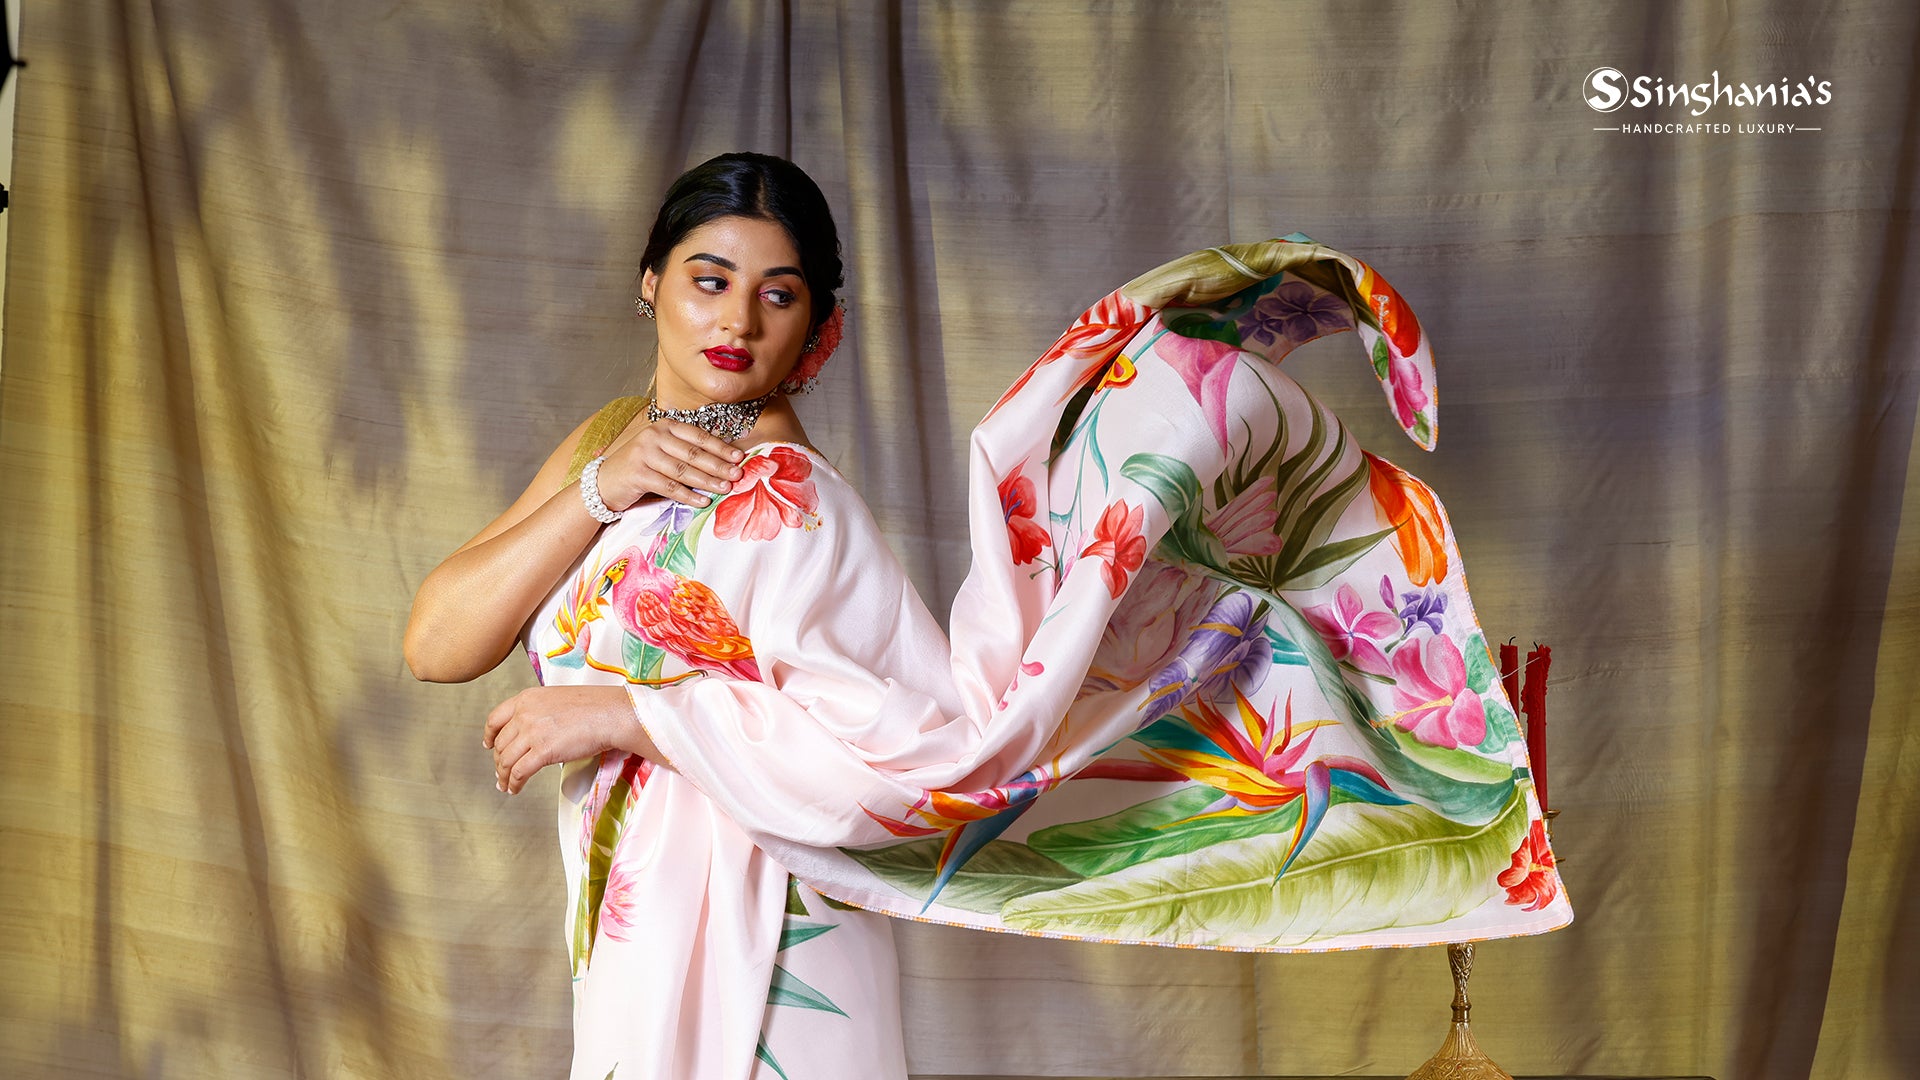 Vintage Vibes: Incorporating Retro Saree Styles into Contemporary Wardrobes